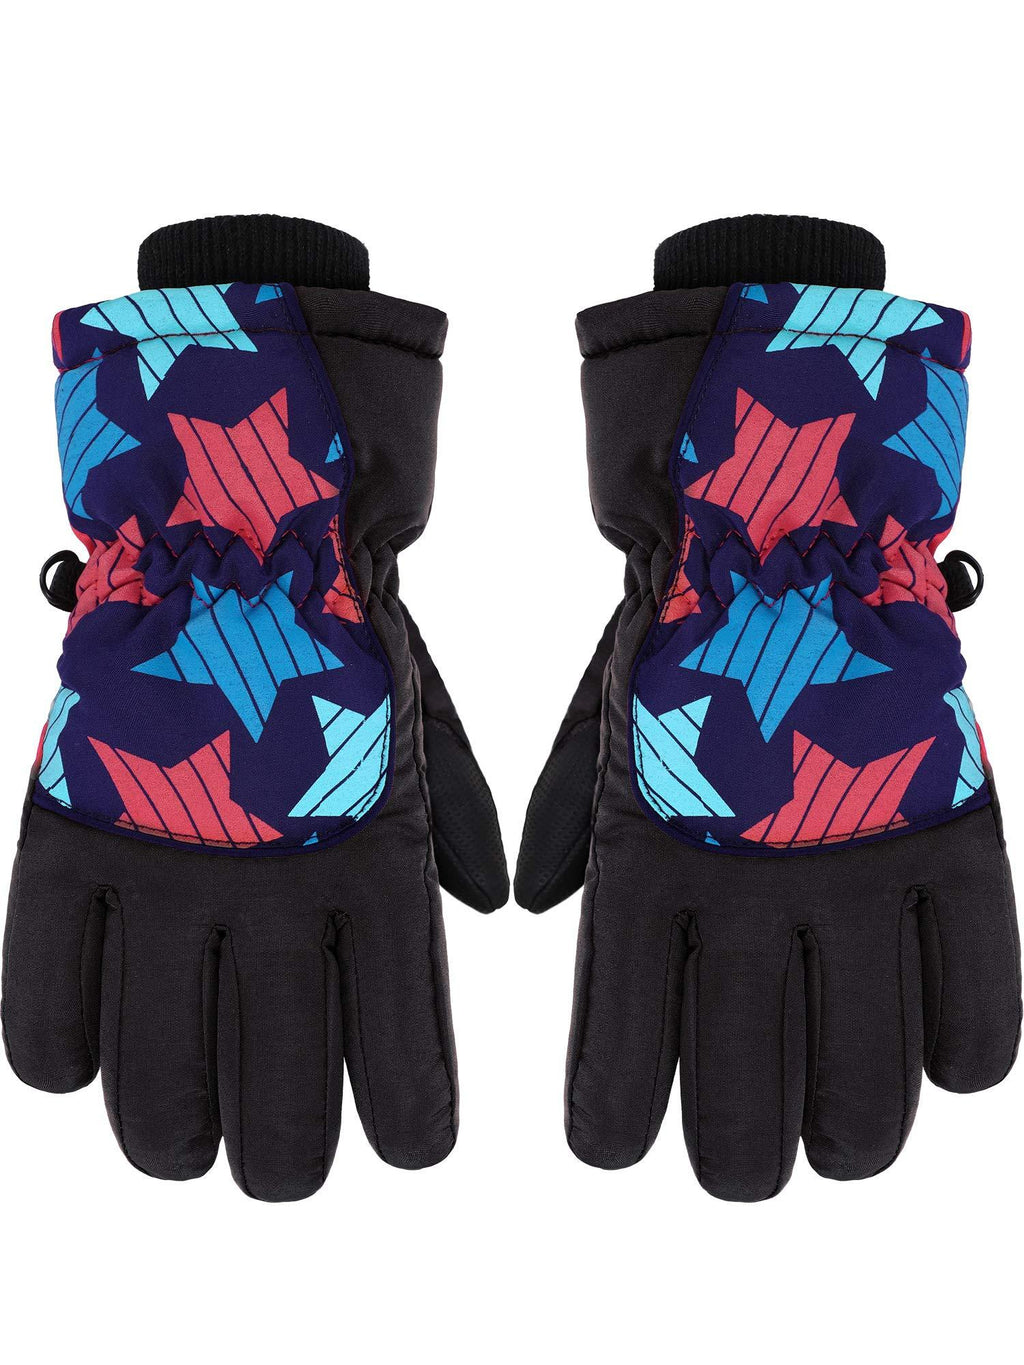 [Australia] - Kids Winter Snow Waterproof Warm Ski Gloves Unisex Printed Mittens for Cold Weather 5-10 Years Old Children Black 